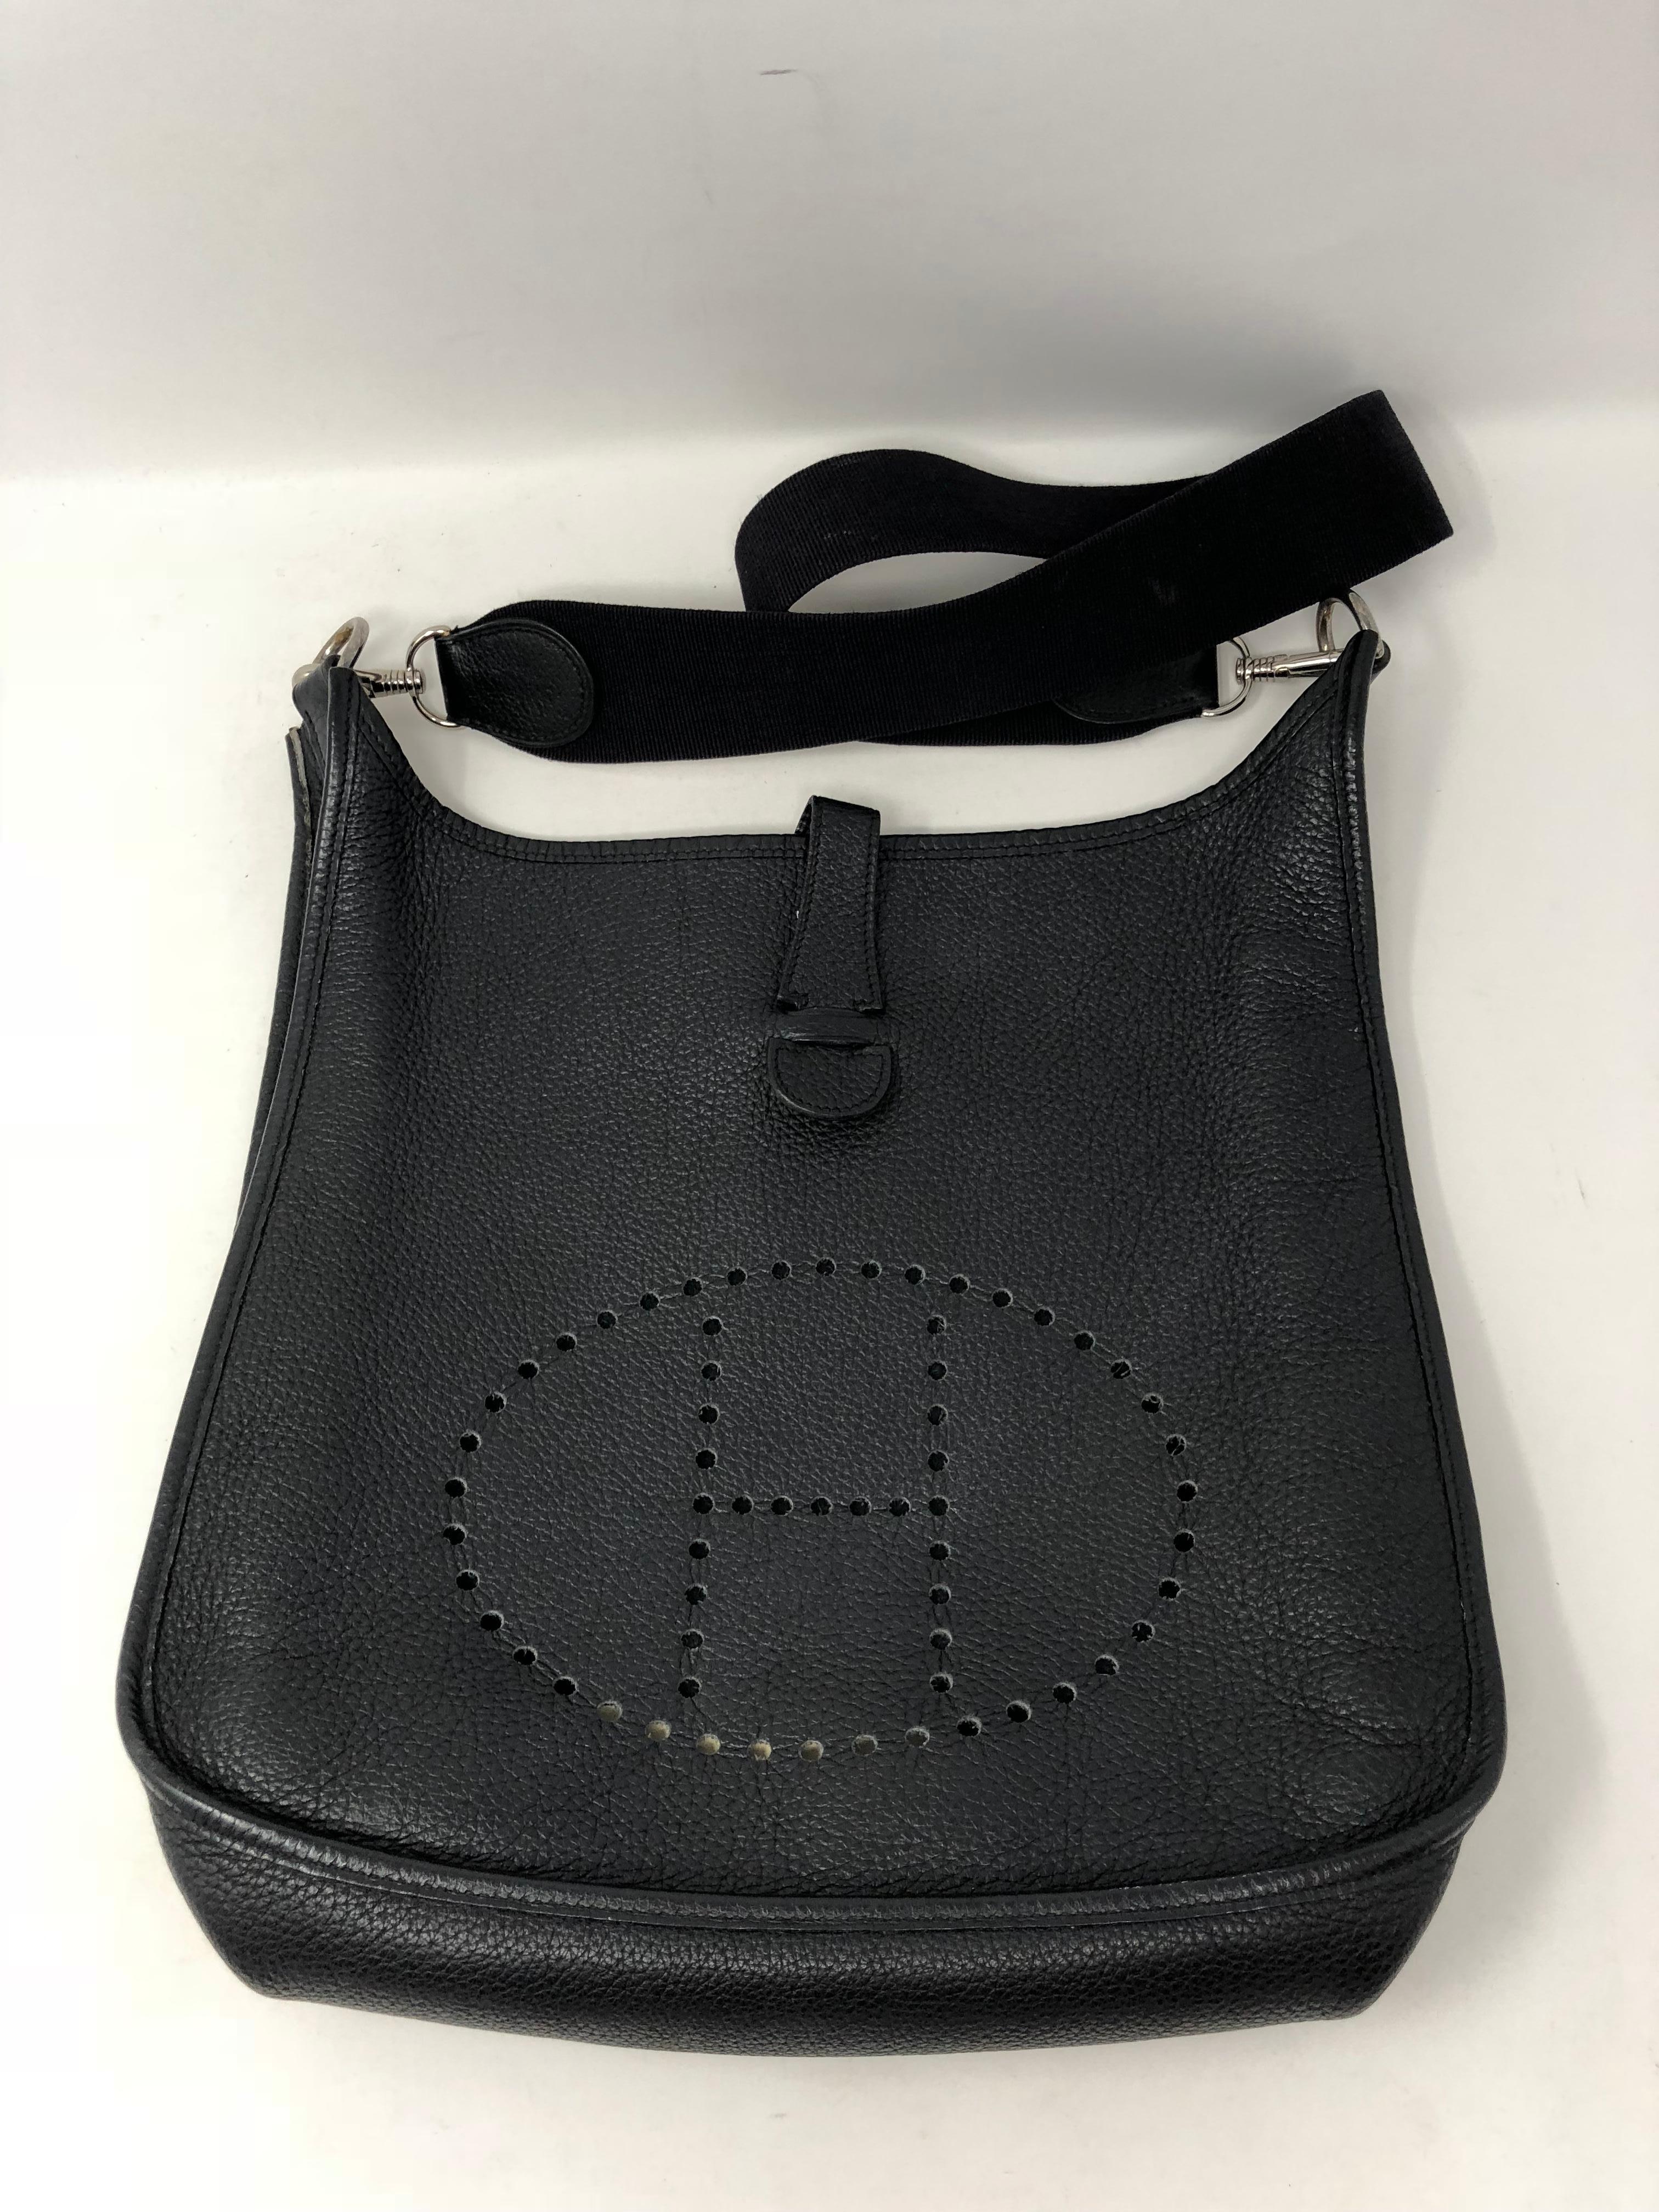 Hermes Black Evelyne GM. Vintage Hermes Series 1. Biggest size GM. Good condition. Classic Black color. Great everyday bag. 